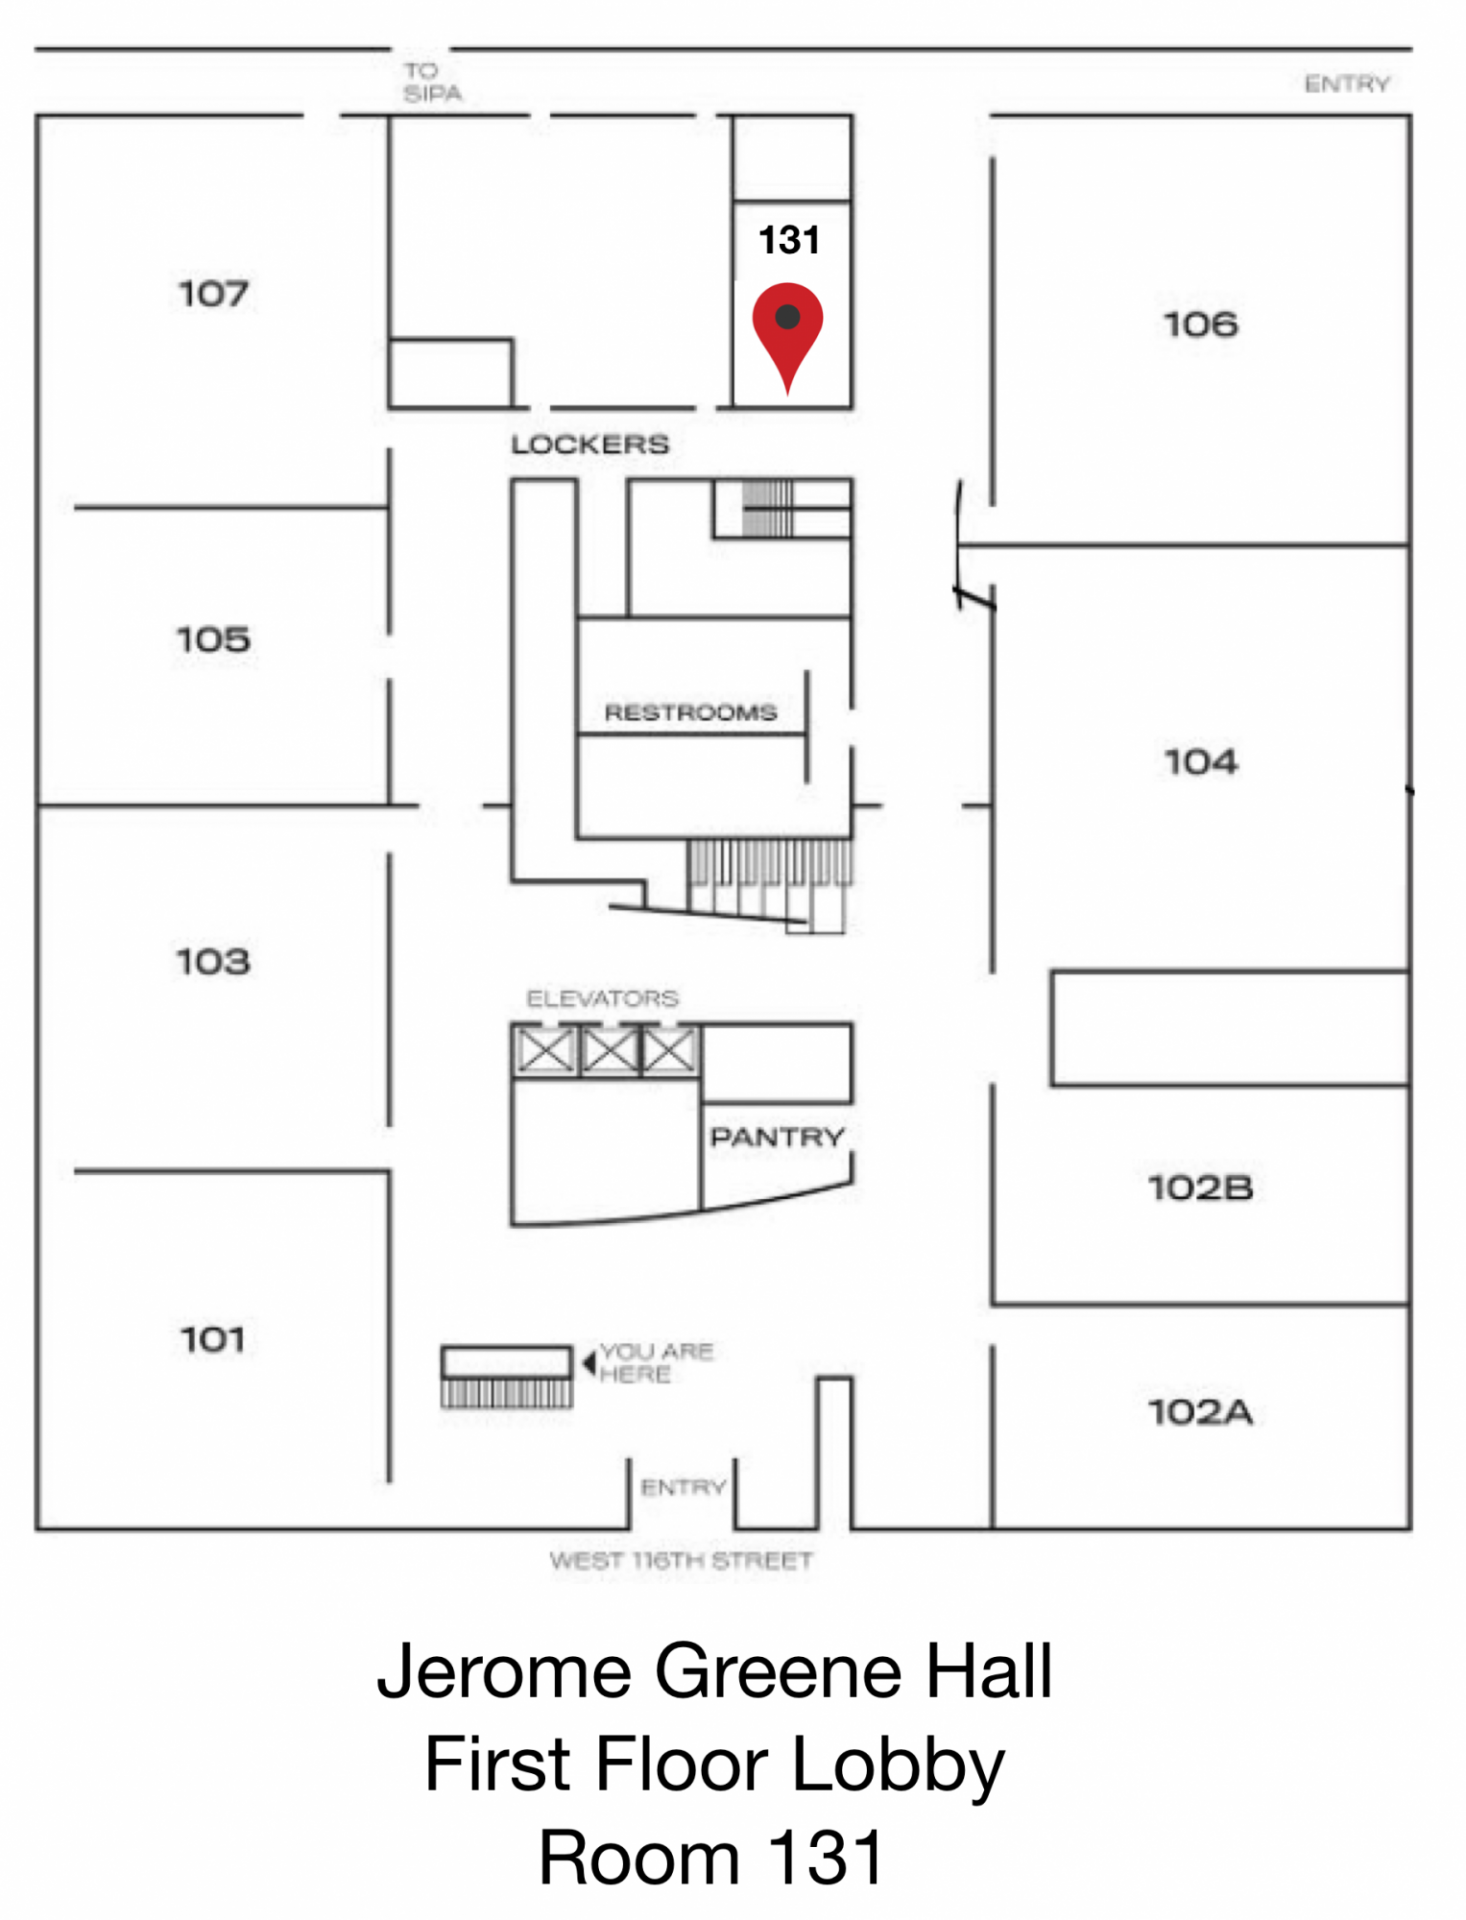 Image of Jerome Greene Hall First Floor Lobby